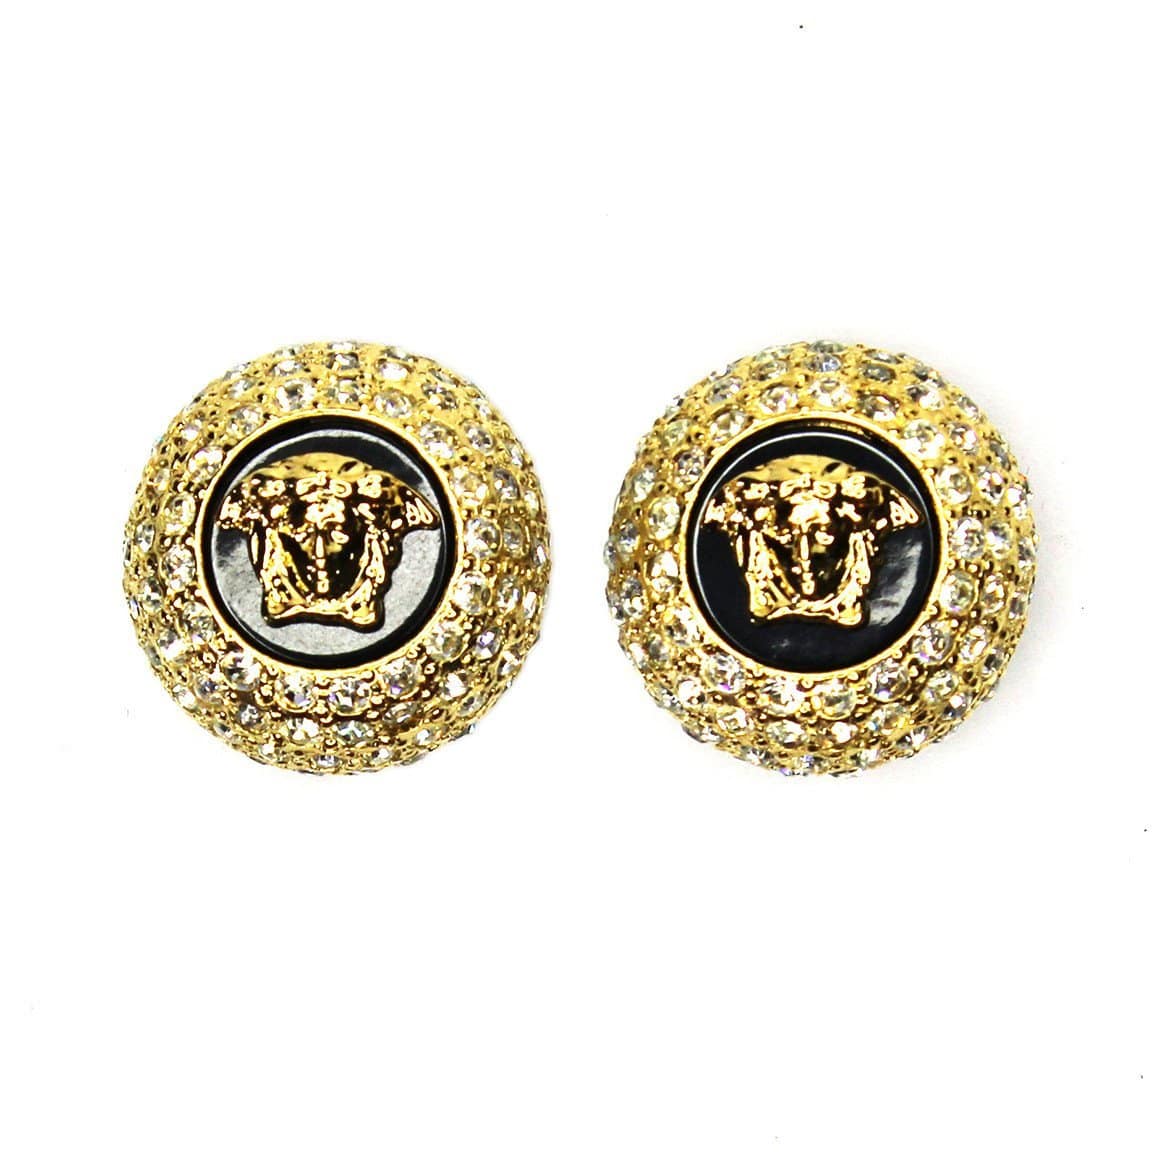 Round Gold/ Black Enamel Vintage Versace Medusa Head Earrings with Crystal Accents RSTKD Vintage